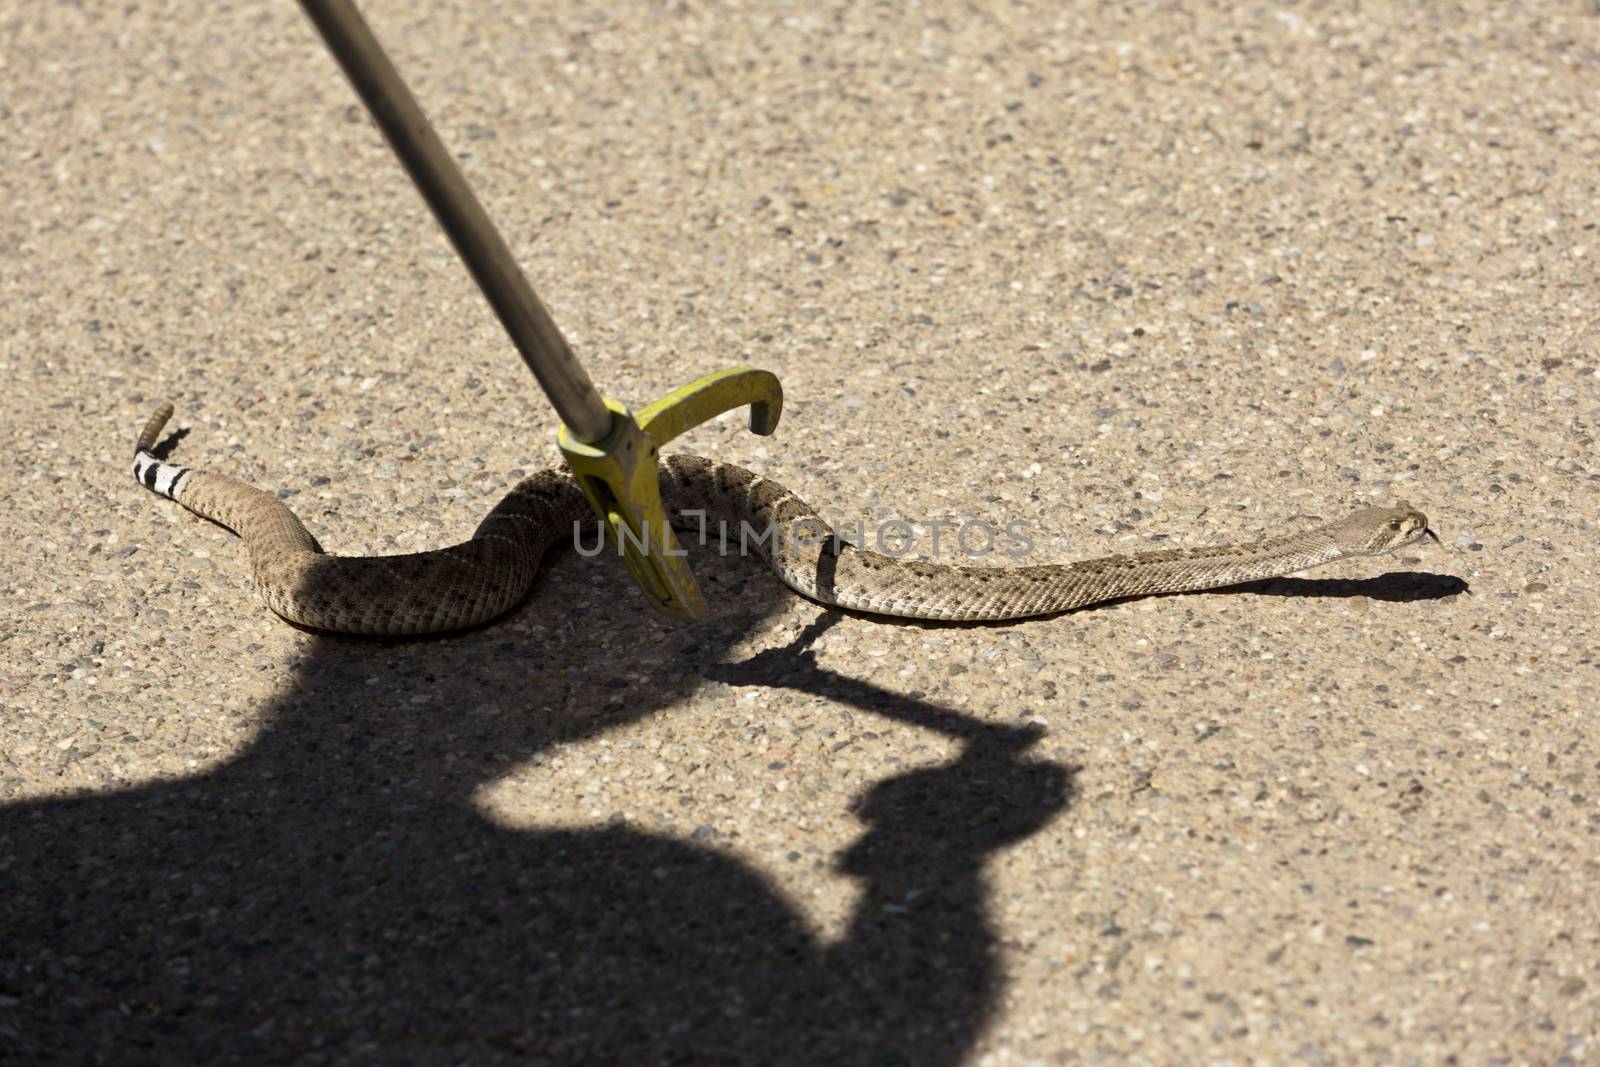 Rattlesnake being captured with professional snake handling tool on cement of Arizona Sonora Desert Museum in Tucson, Arizona